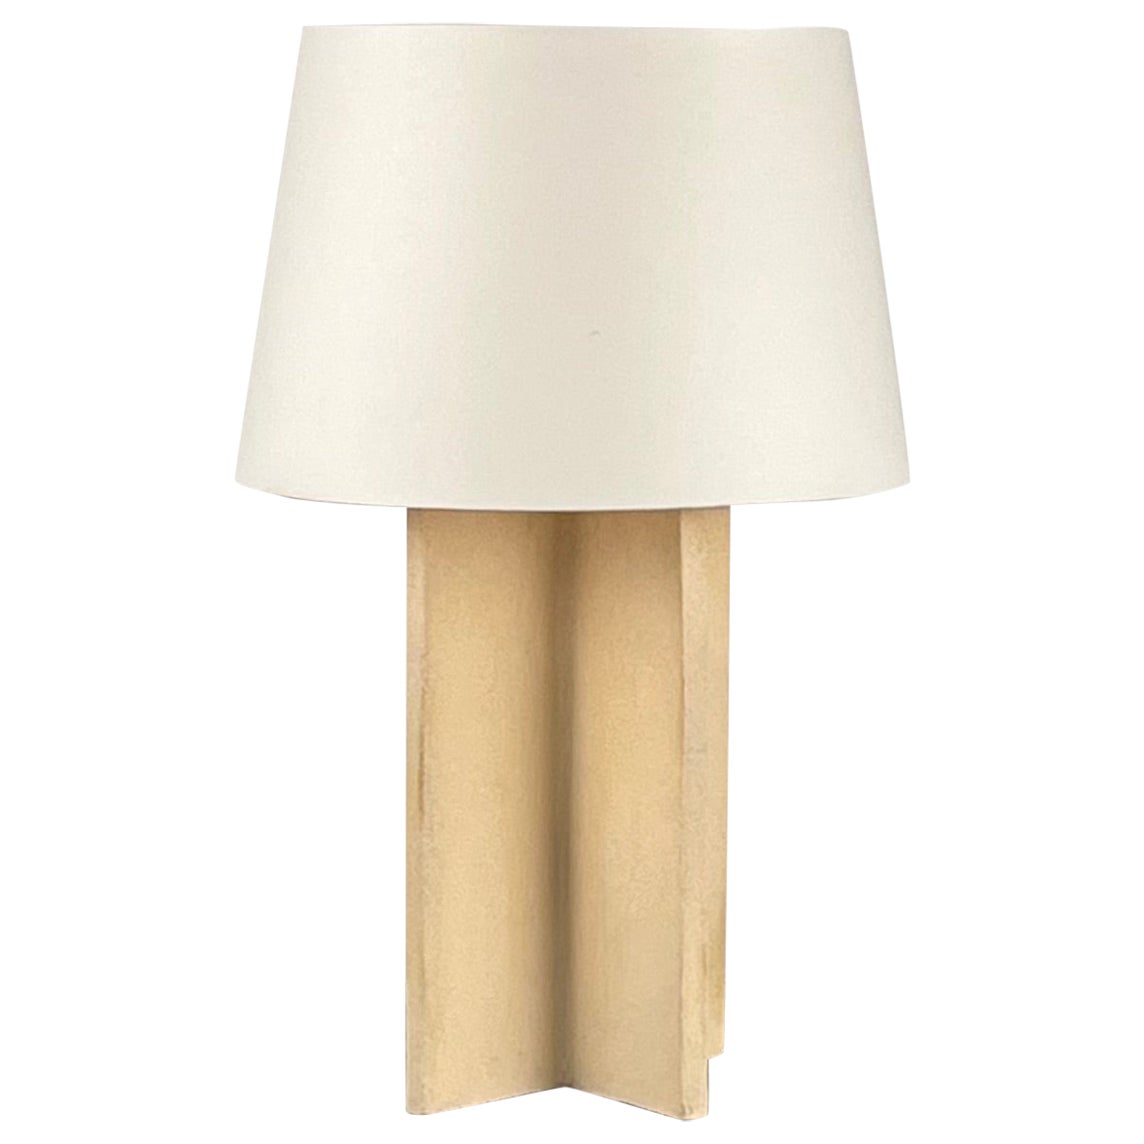 The 'Croisillon' Lampe aus cremefarbener Keramik mit Pergamentschirm von Design Frères